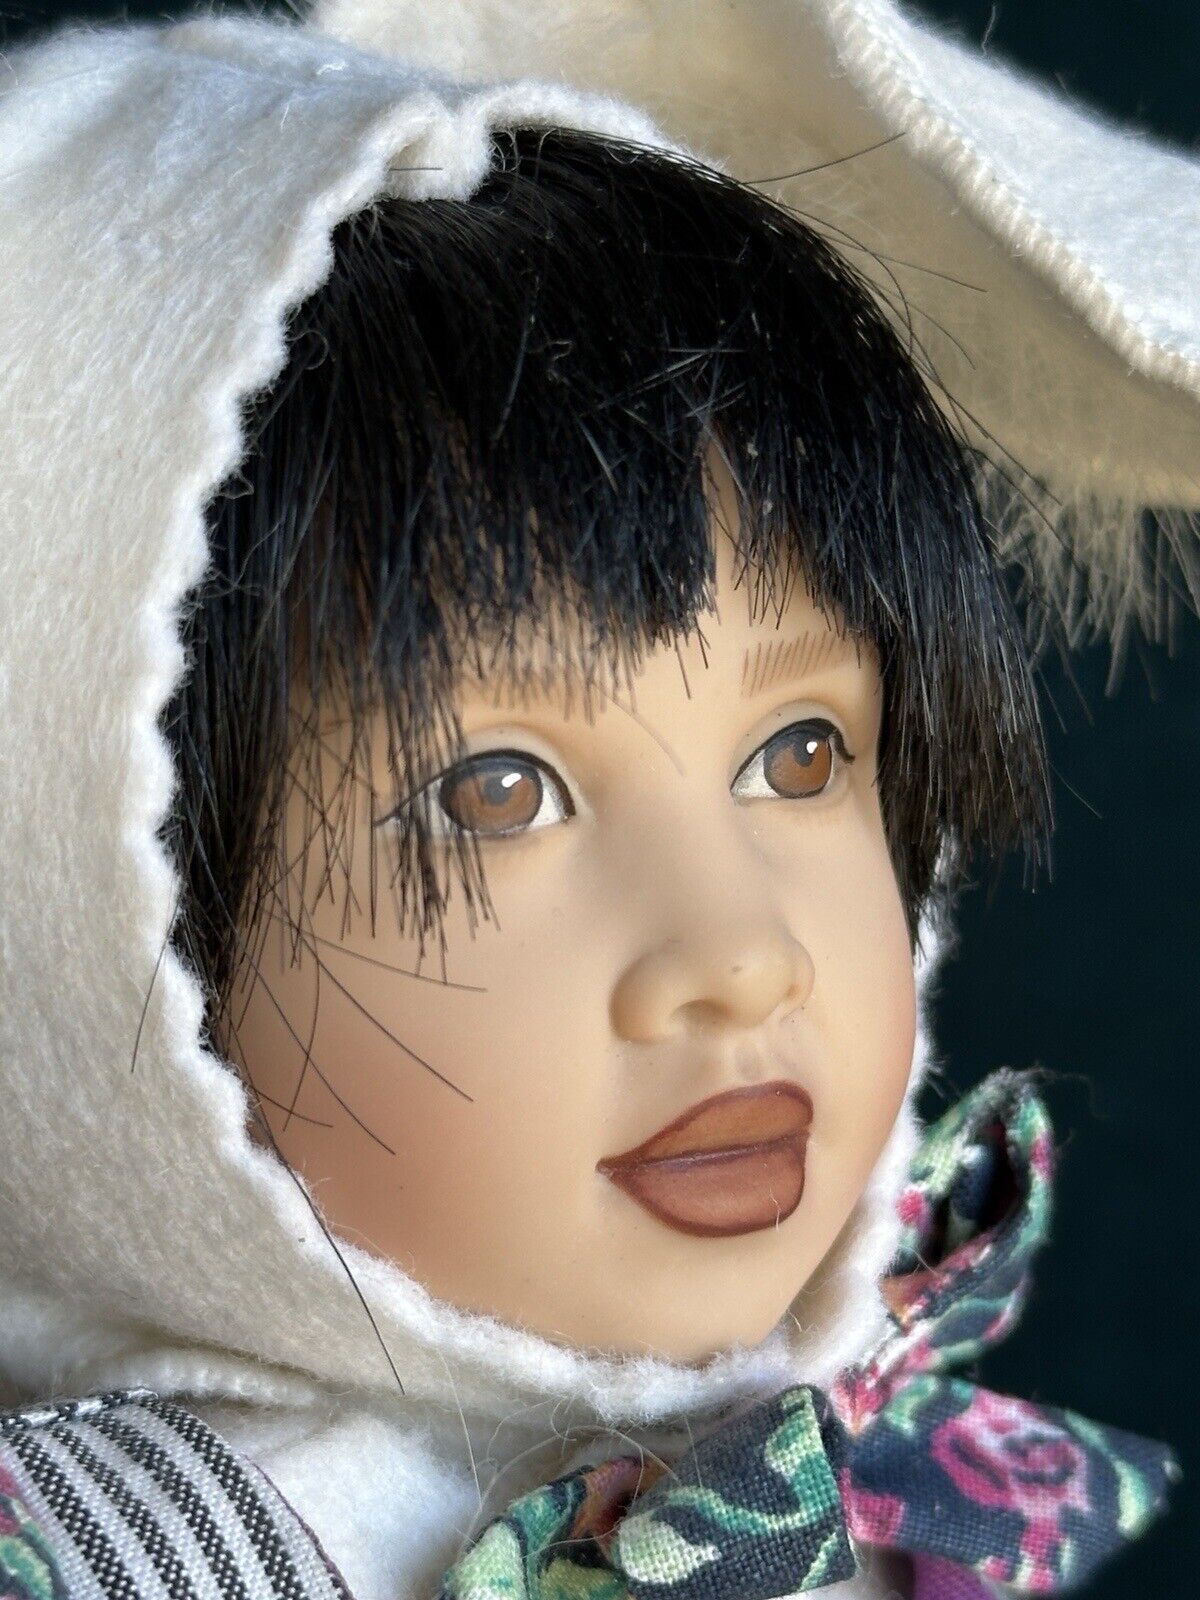 Collectible Vinyl 12” Helen Kish White Rabbit Doll LE 500